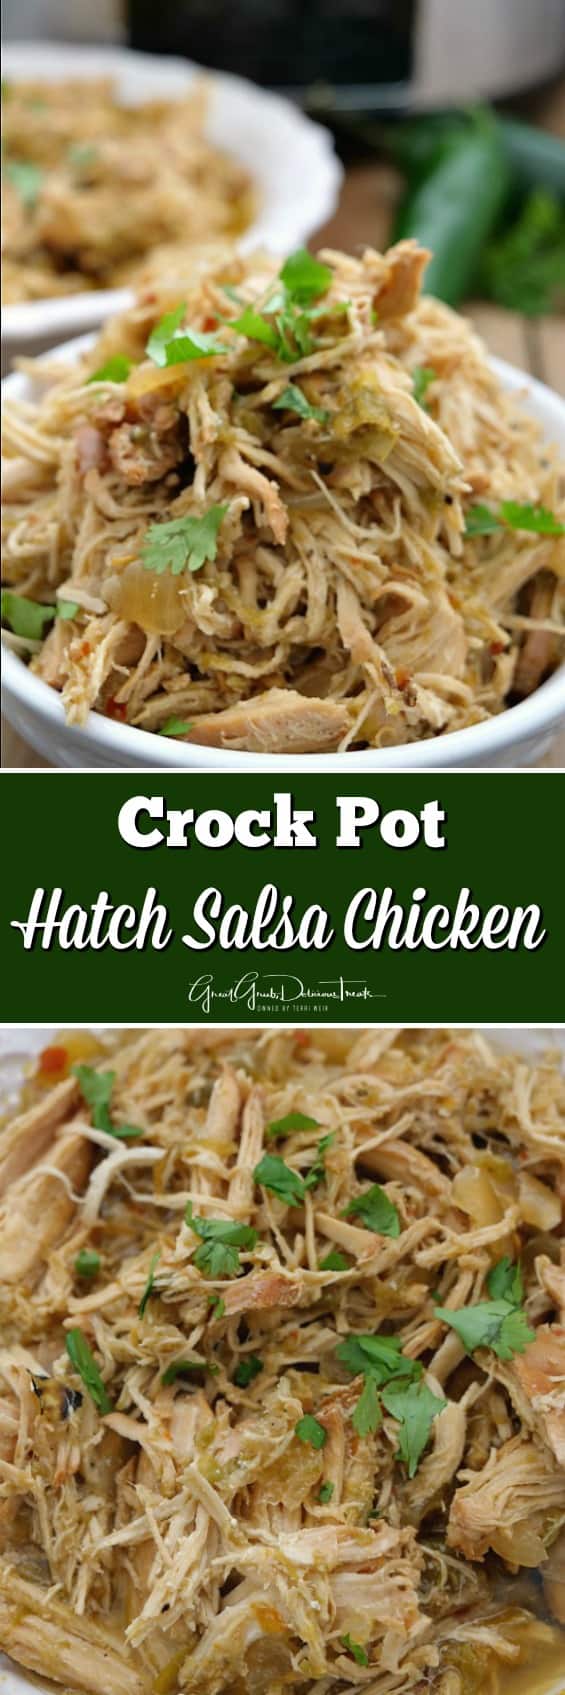 Crock Pot Hatch Salsa Chicken